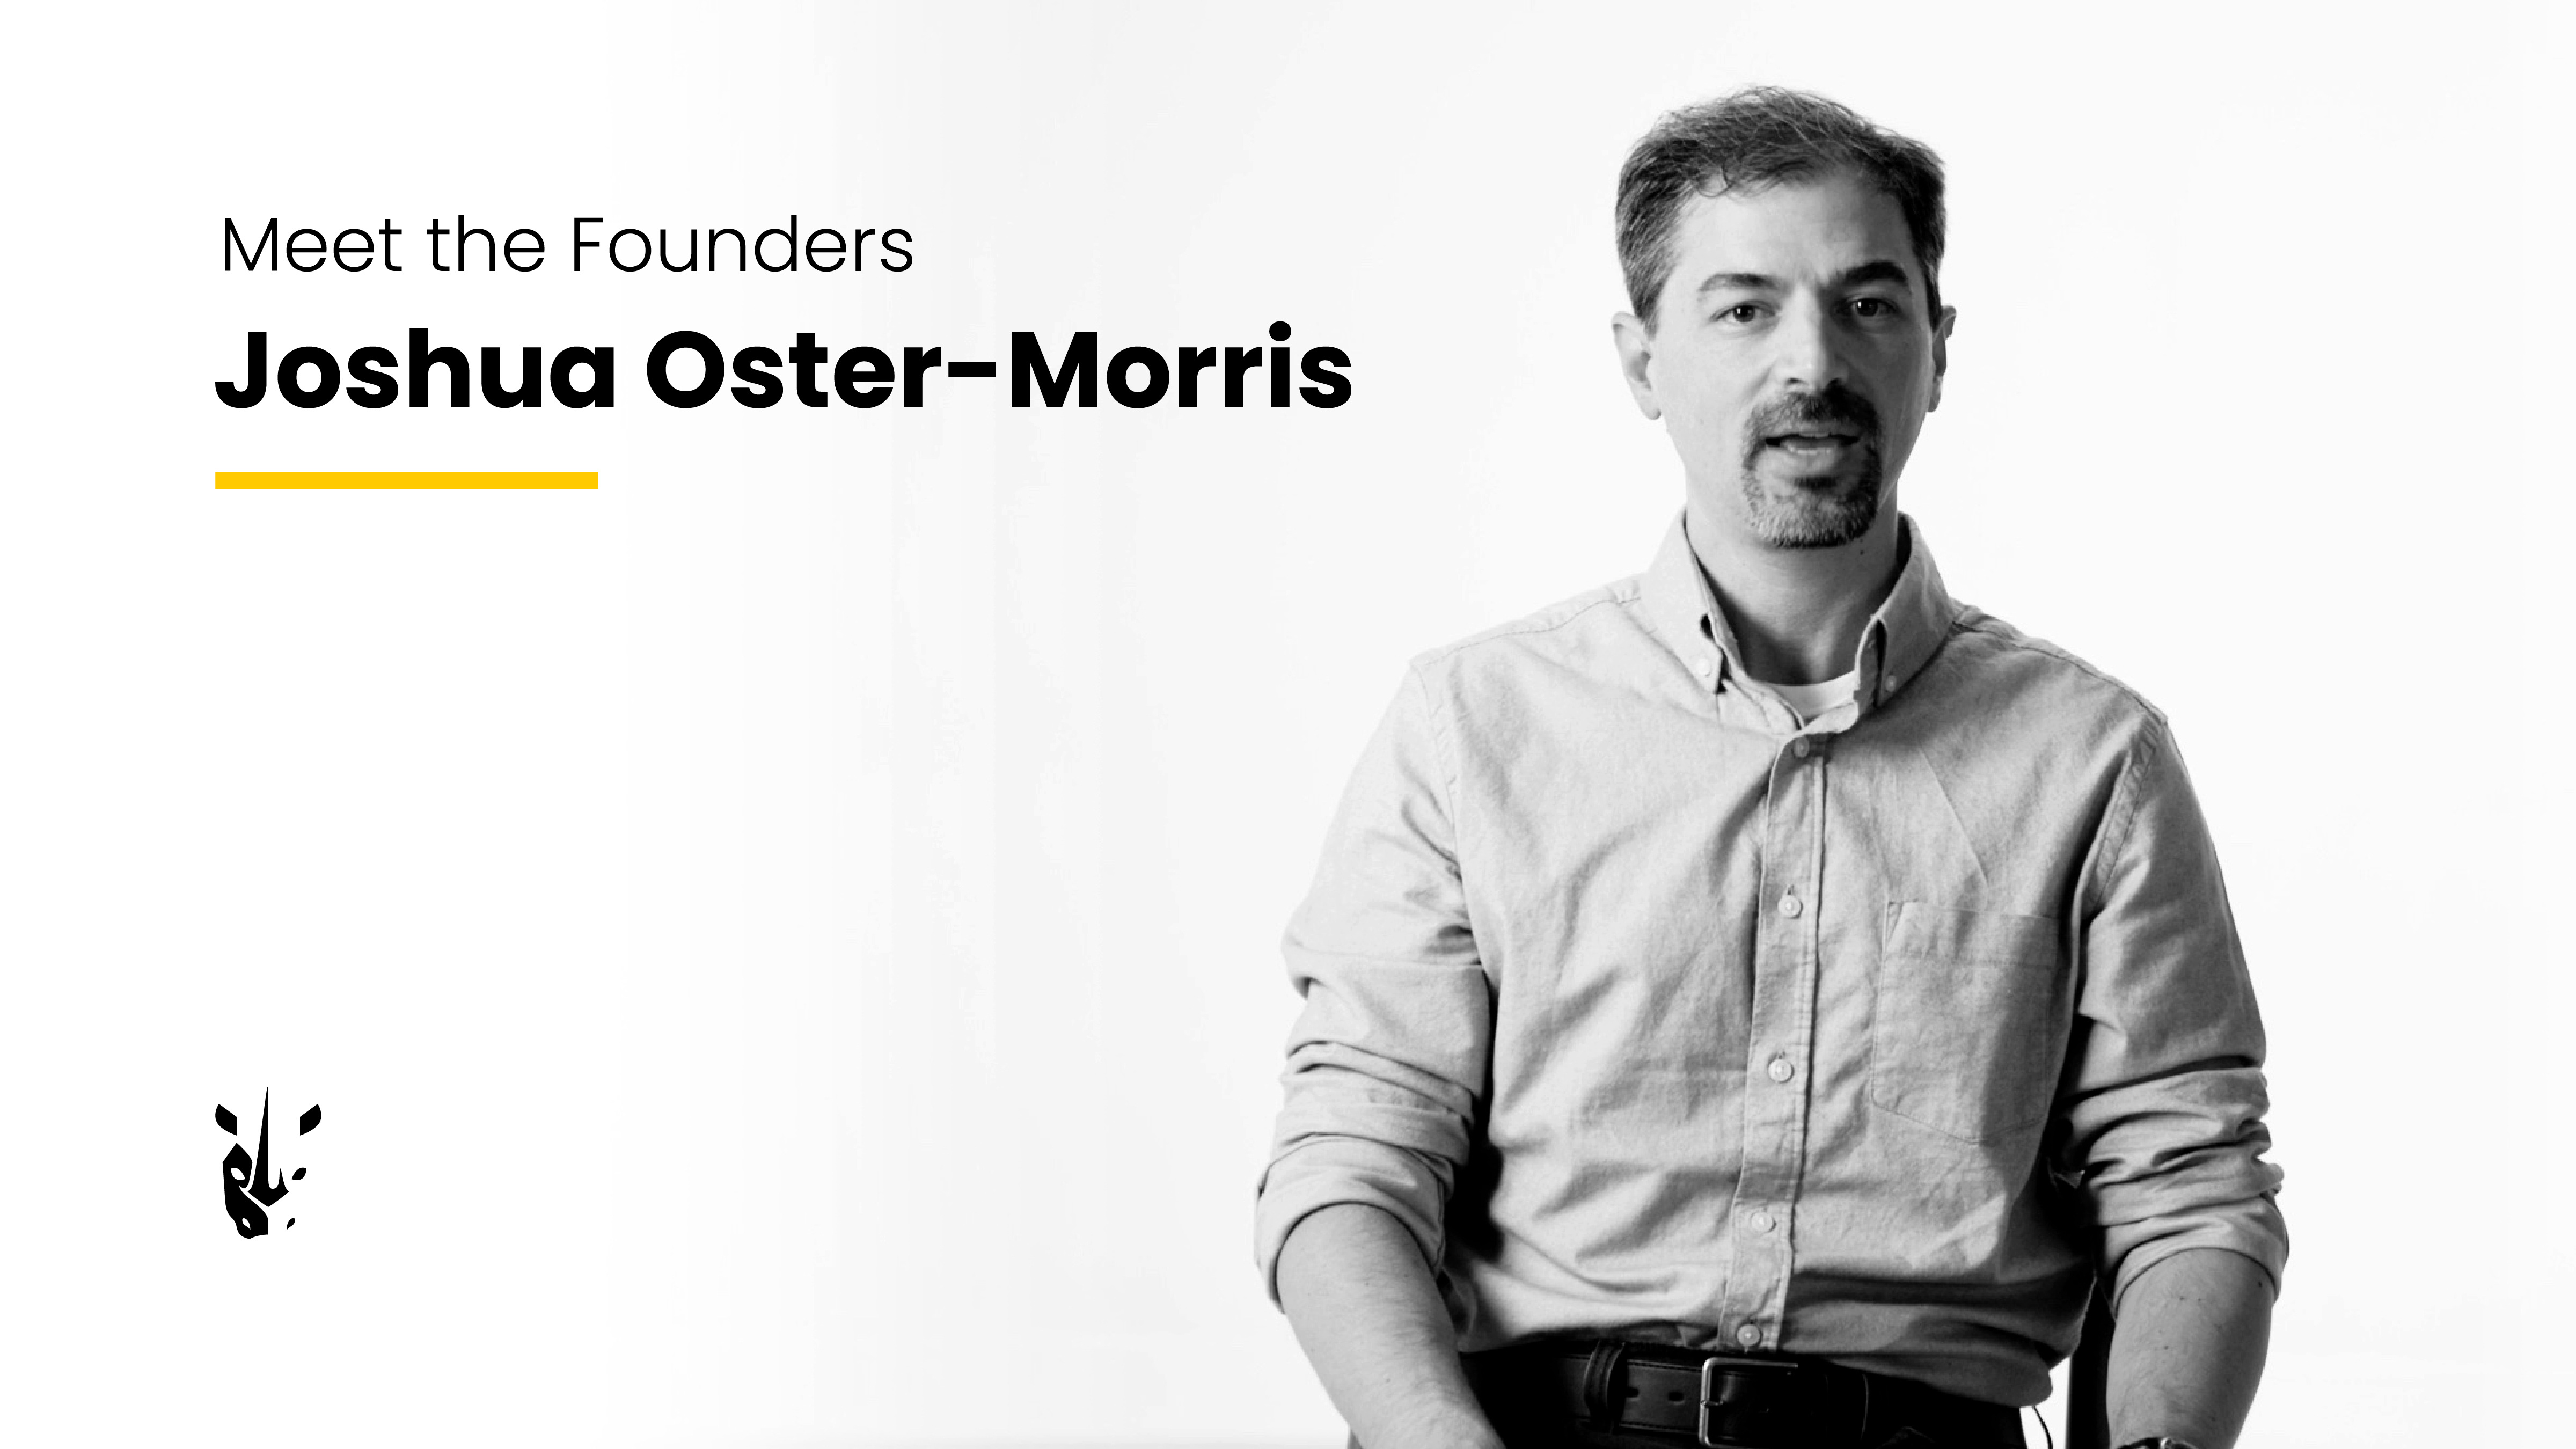 Meet the Founders: Joshua Oster-Morris